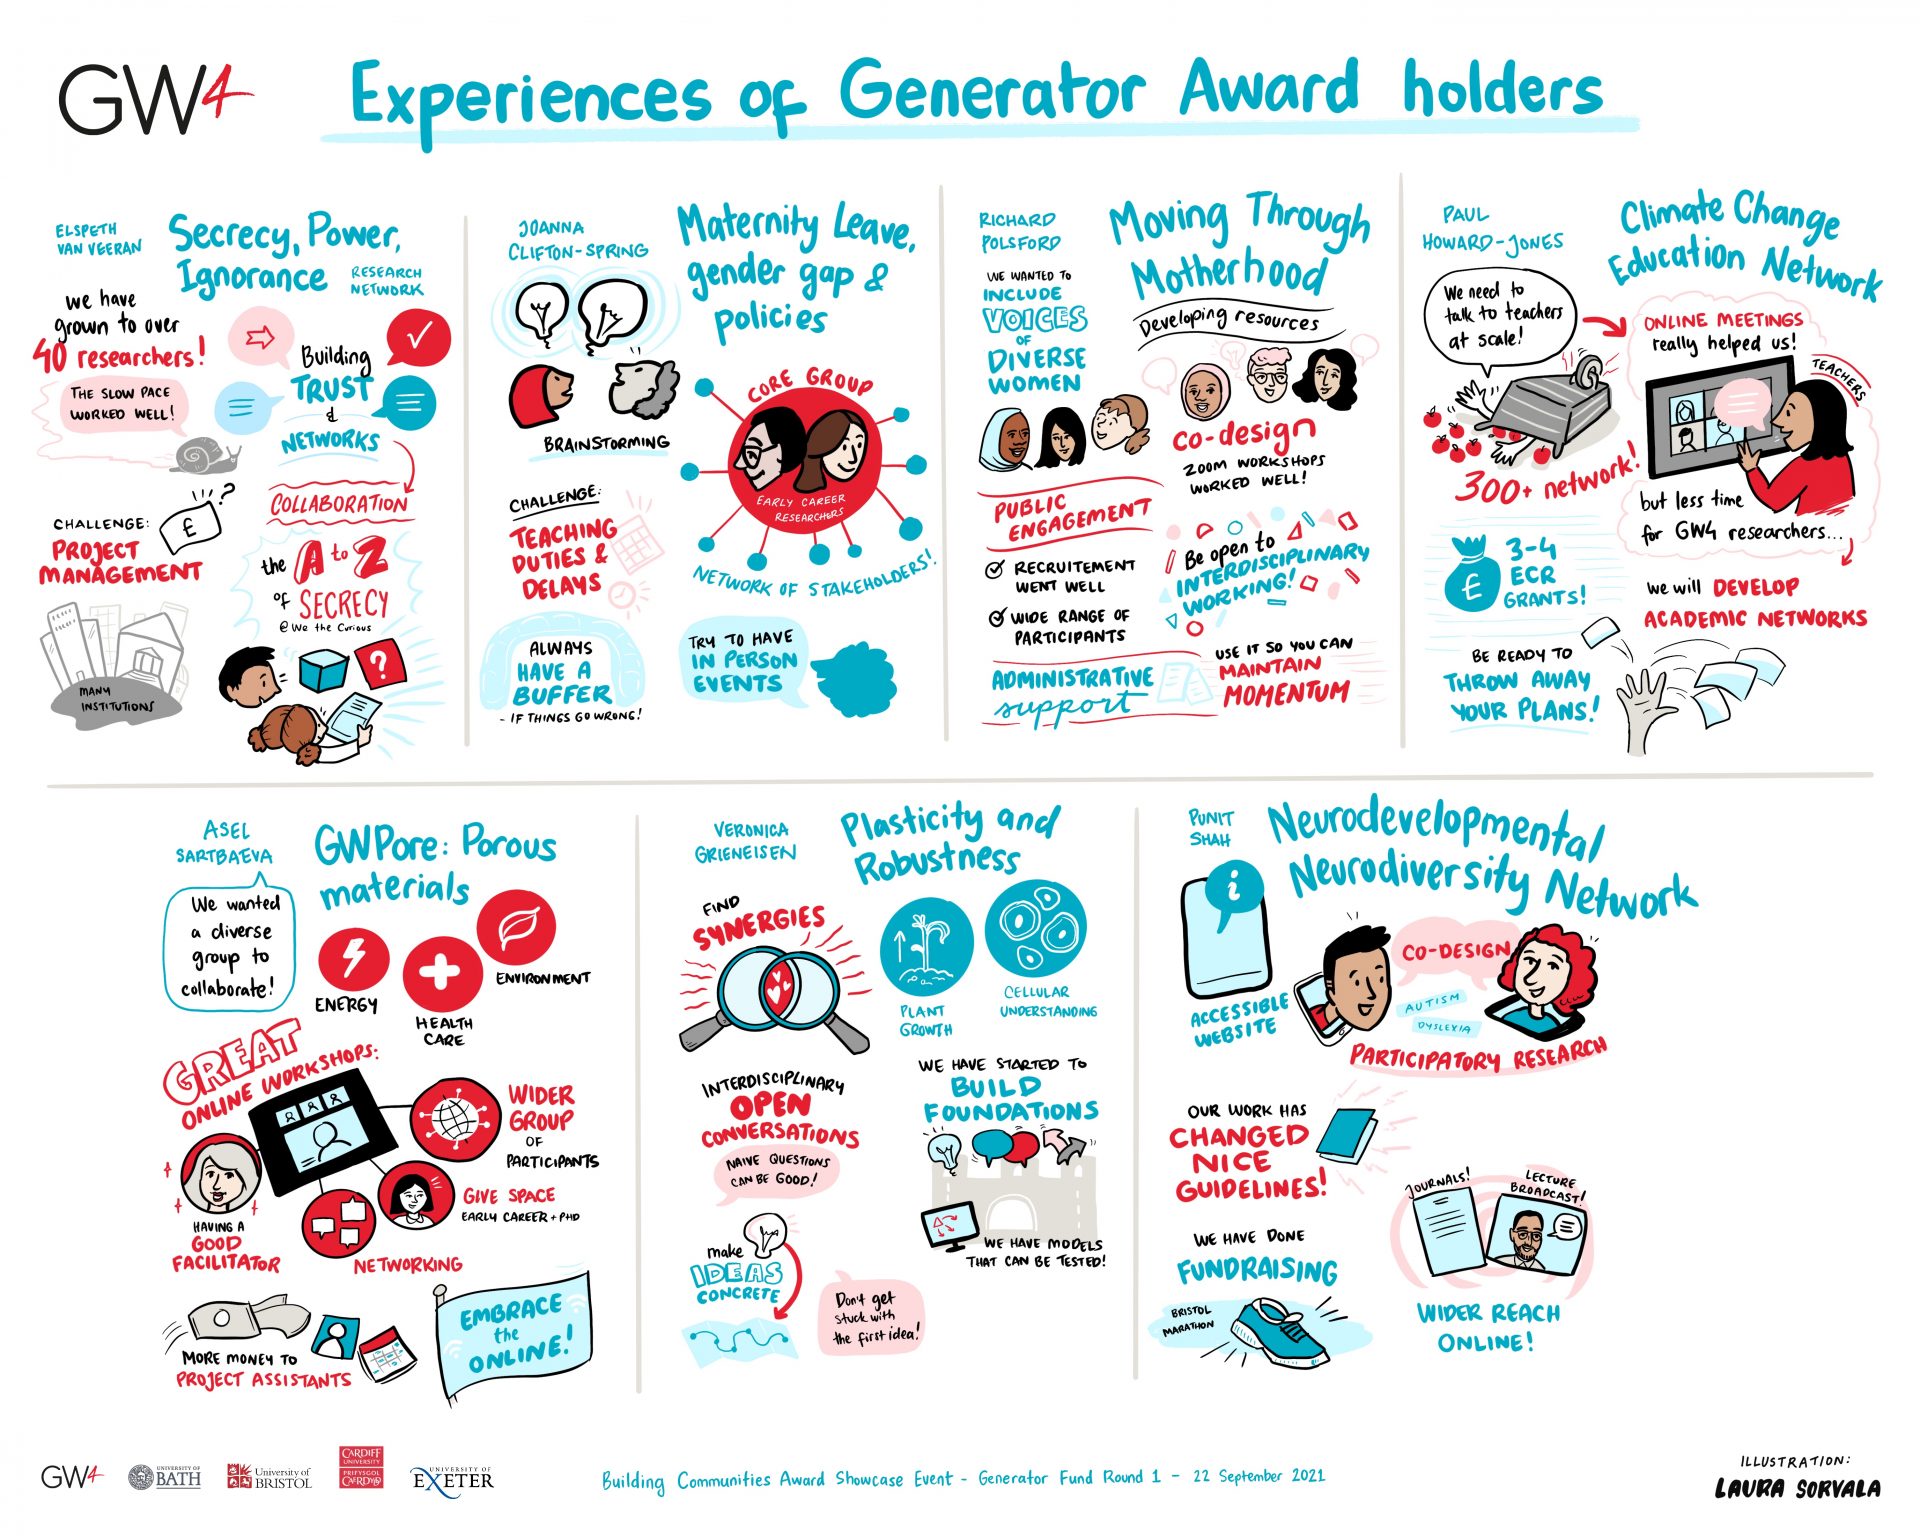 GW4 Generator Award holders showcase new communities at inaugural online event